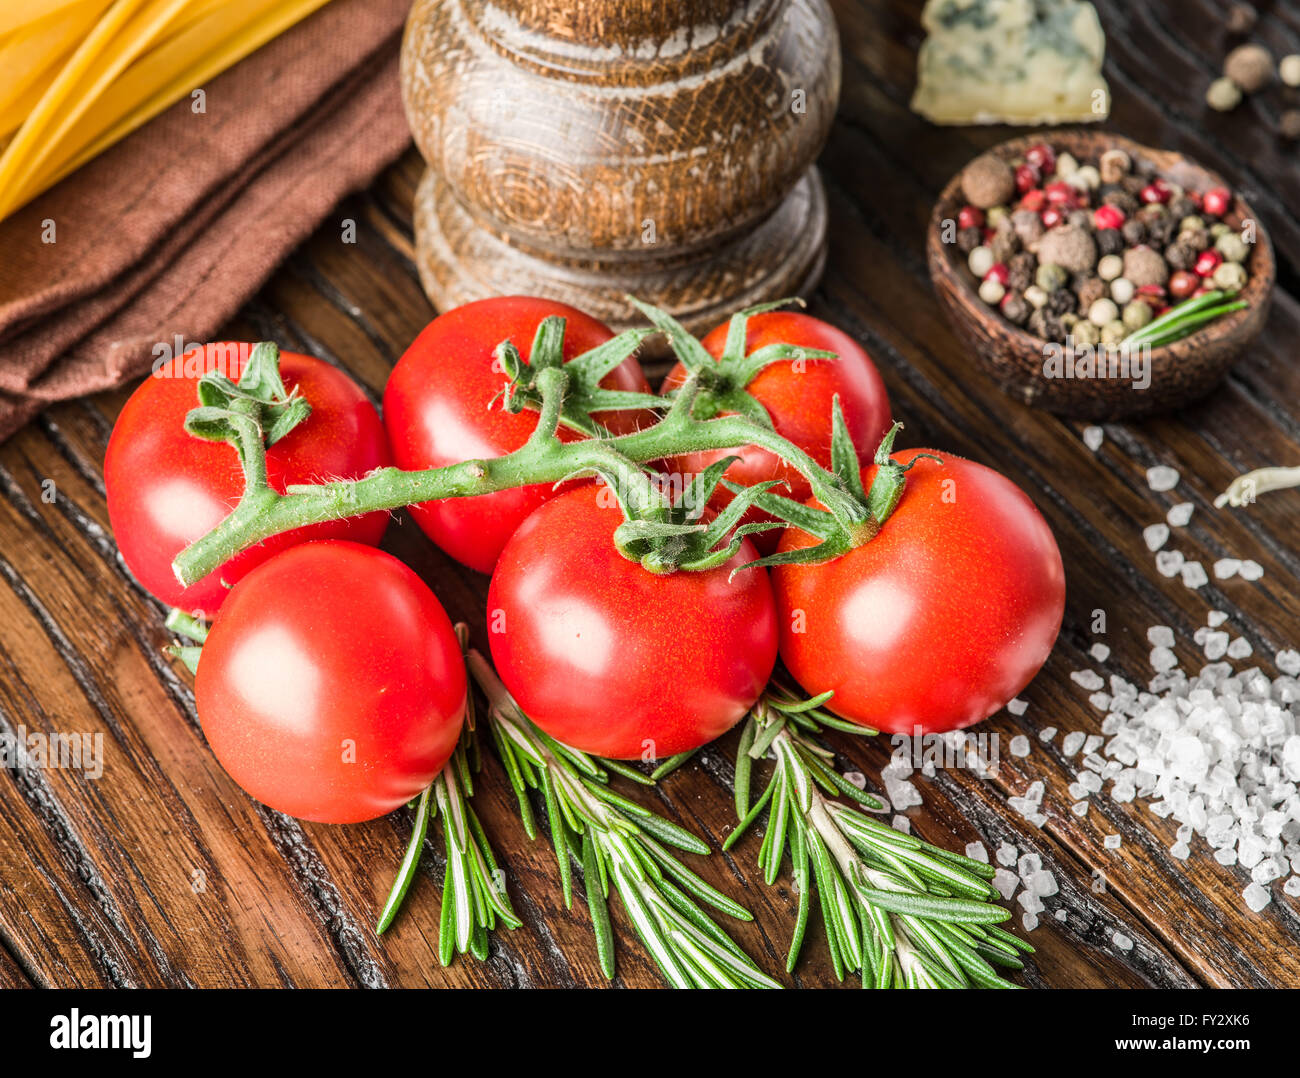 Pasta ingredientes. Tomates Cherry, spaghetti pasta, romero y especias sobre la mesa de madera. Foto de stock